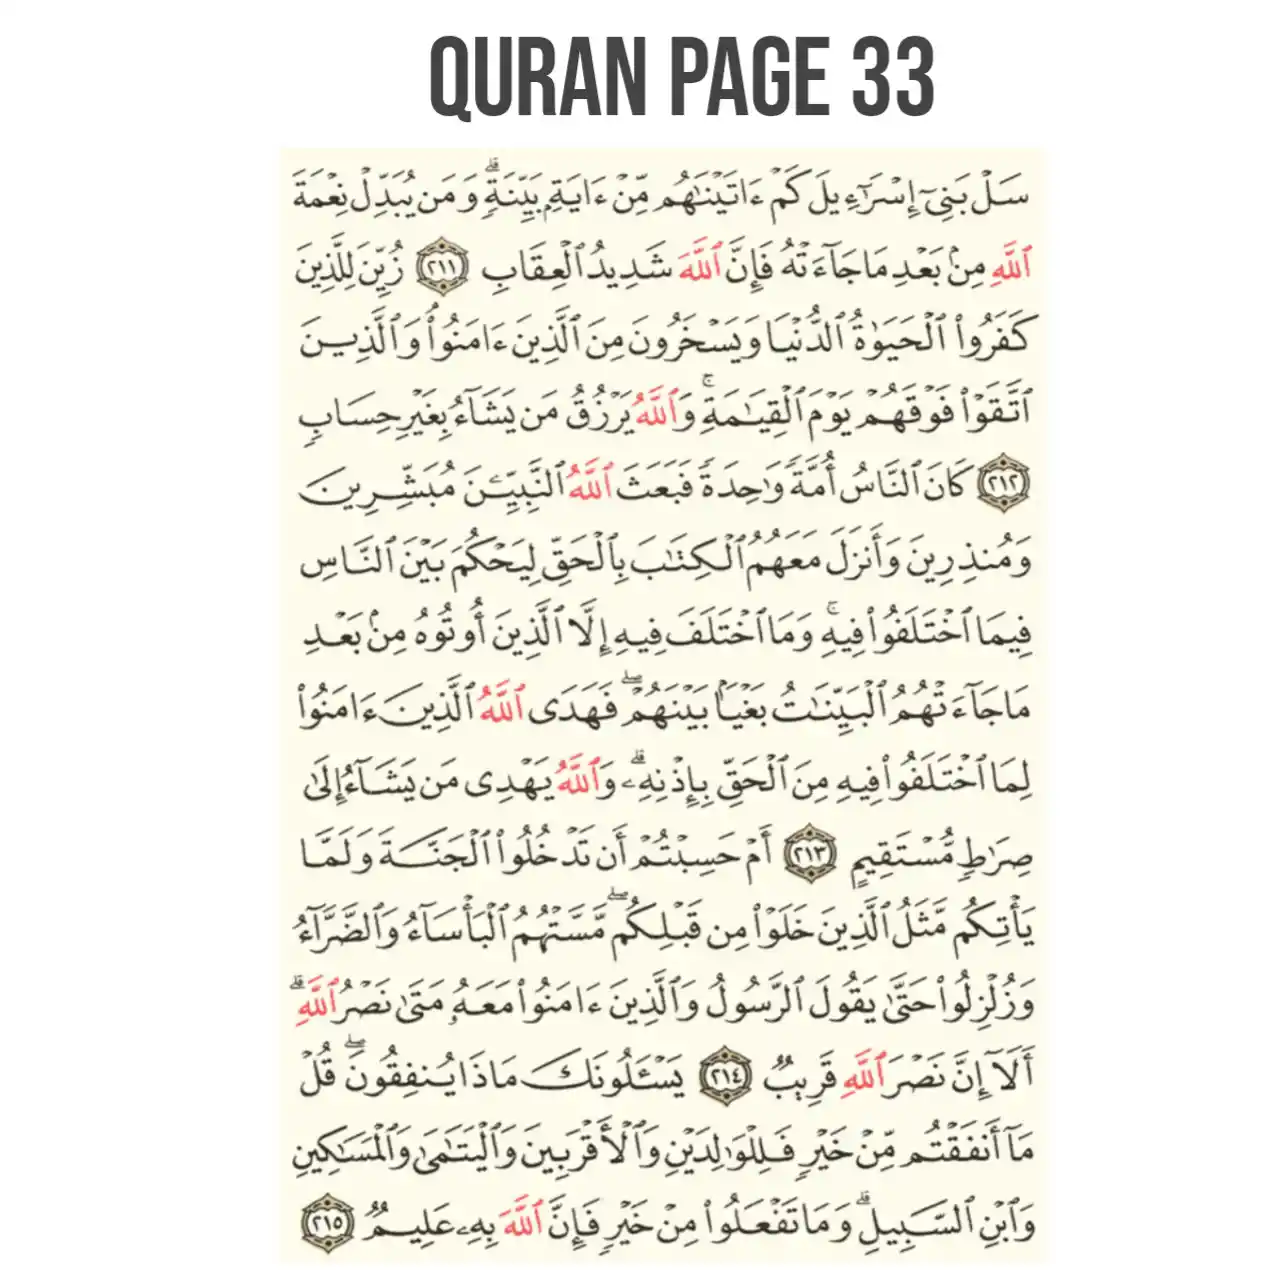 Quran page 33